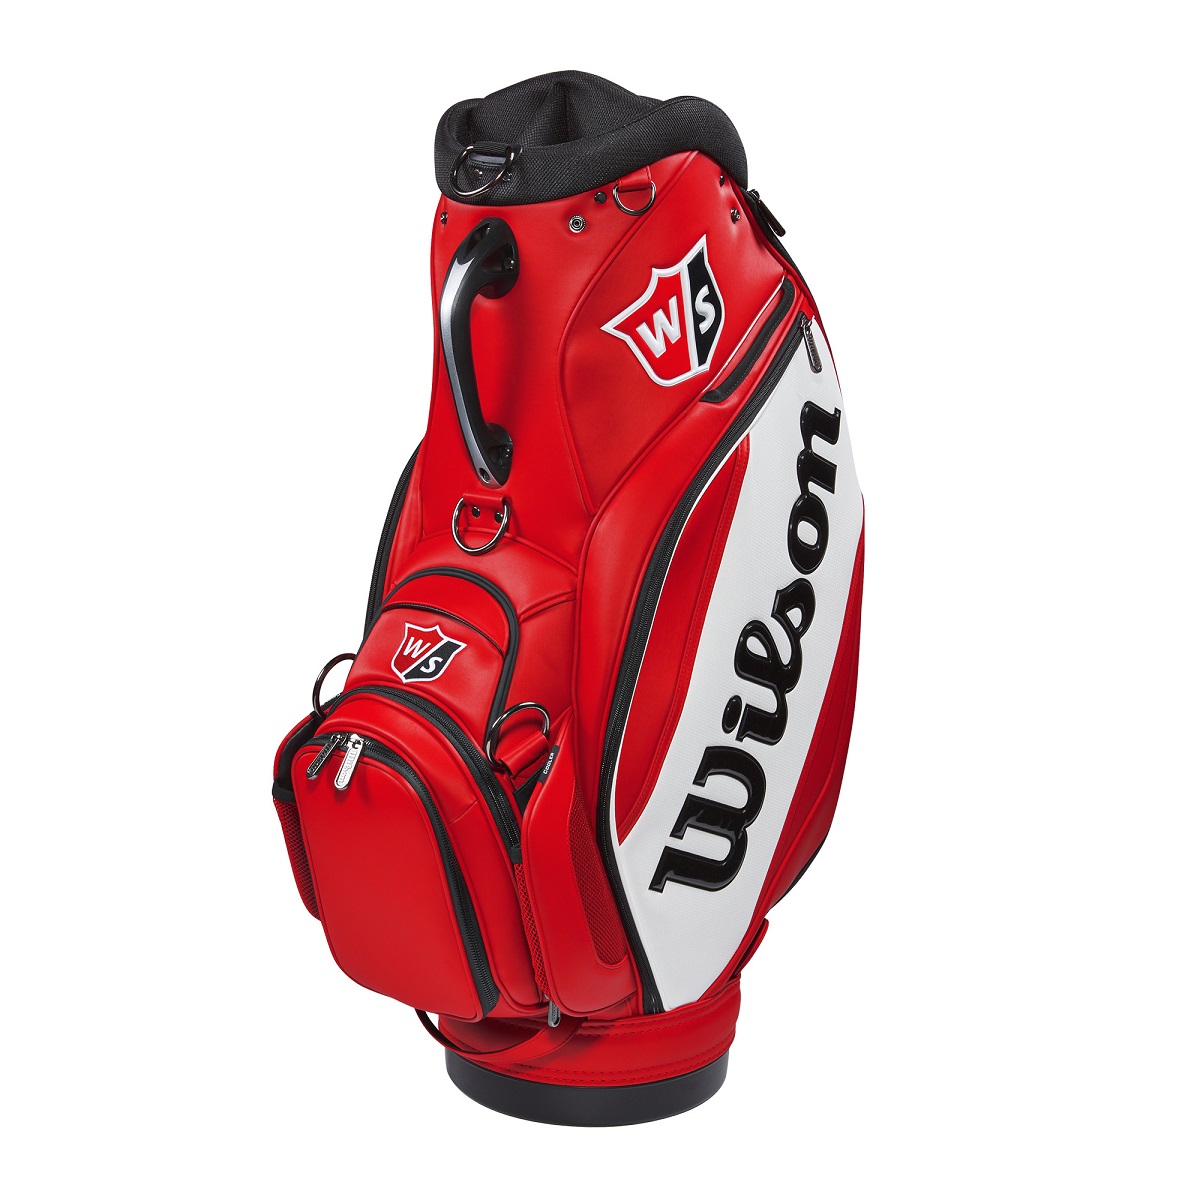 T Overfladisk Vil ikke Wilson Pro Tour Golf Staff Bag from american golf